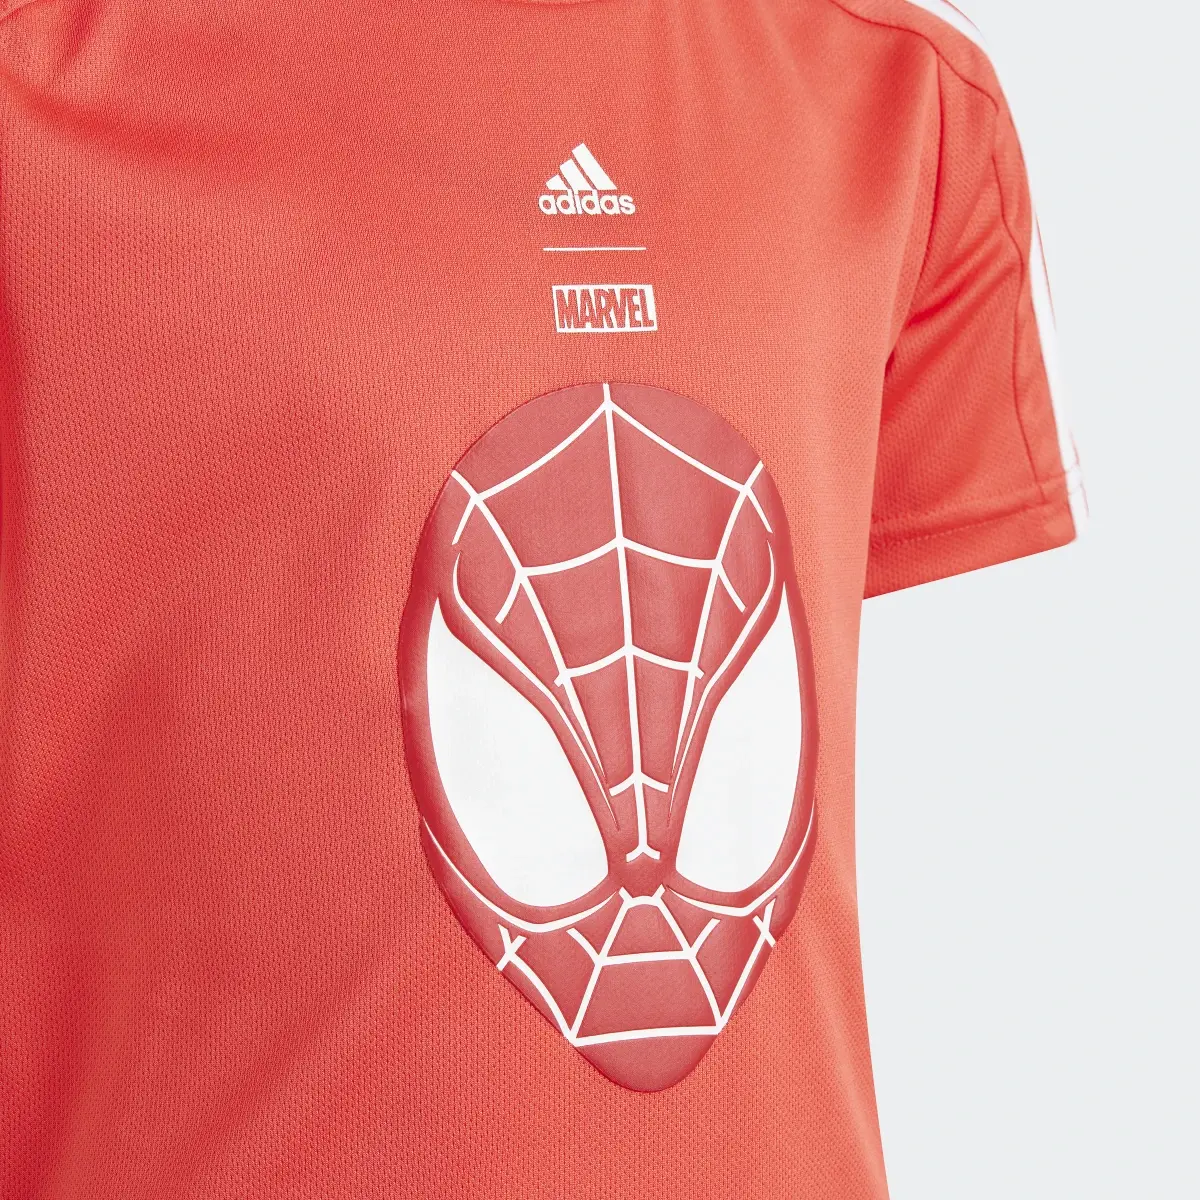 Adidas T-shirt Spider-Man adidas x Marvel. 3